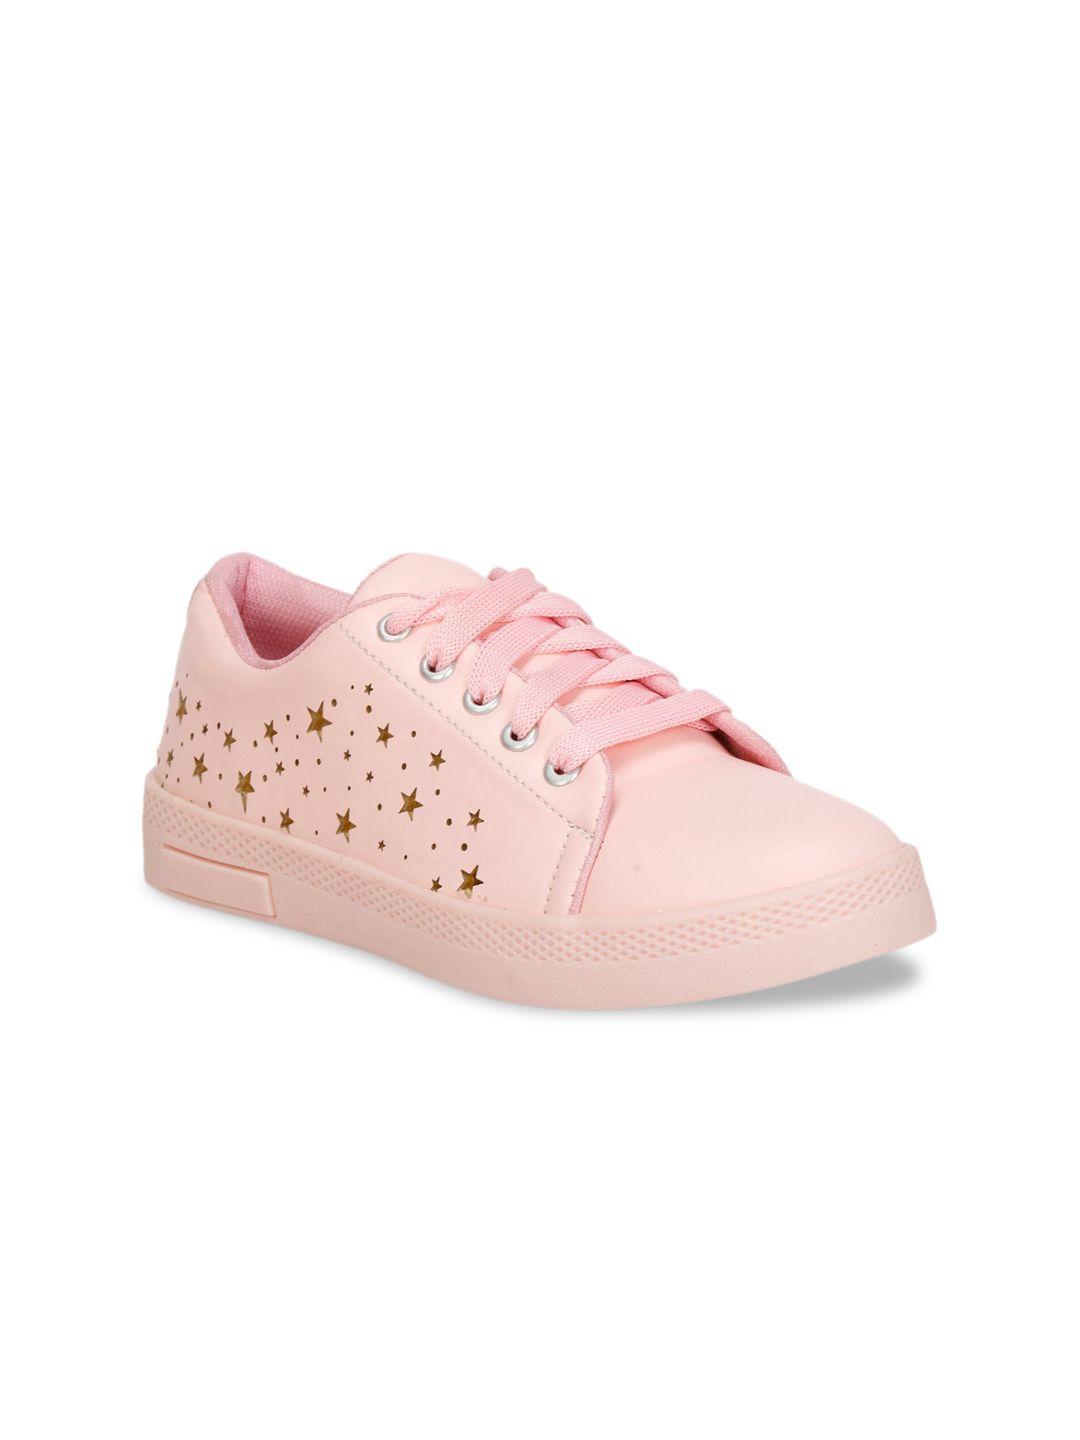 denill women  pink printed sneakers